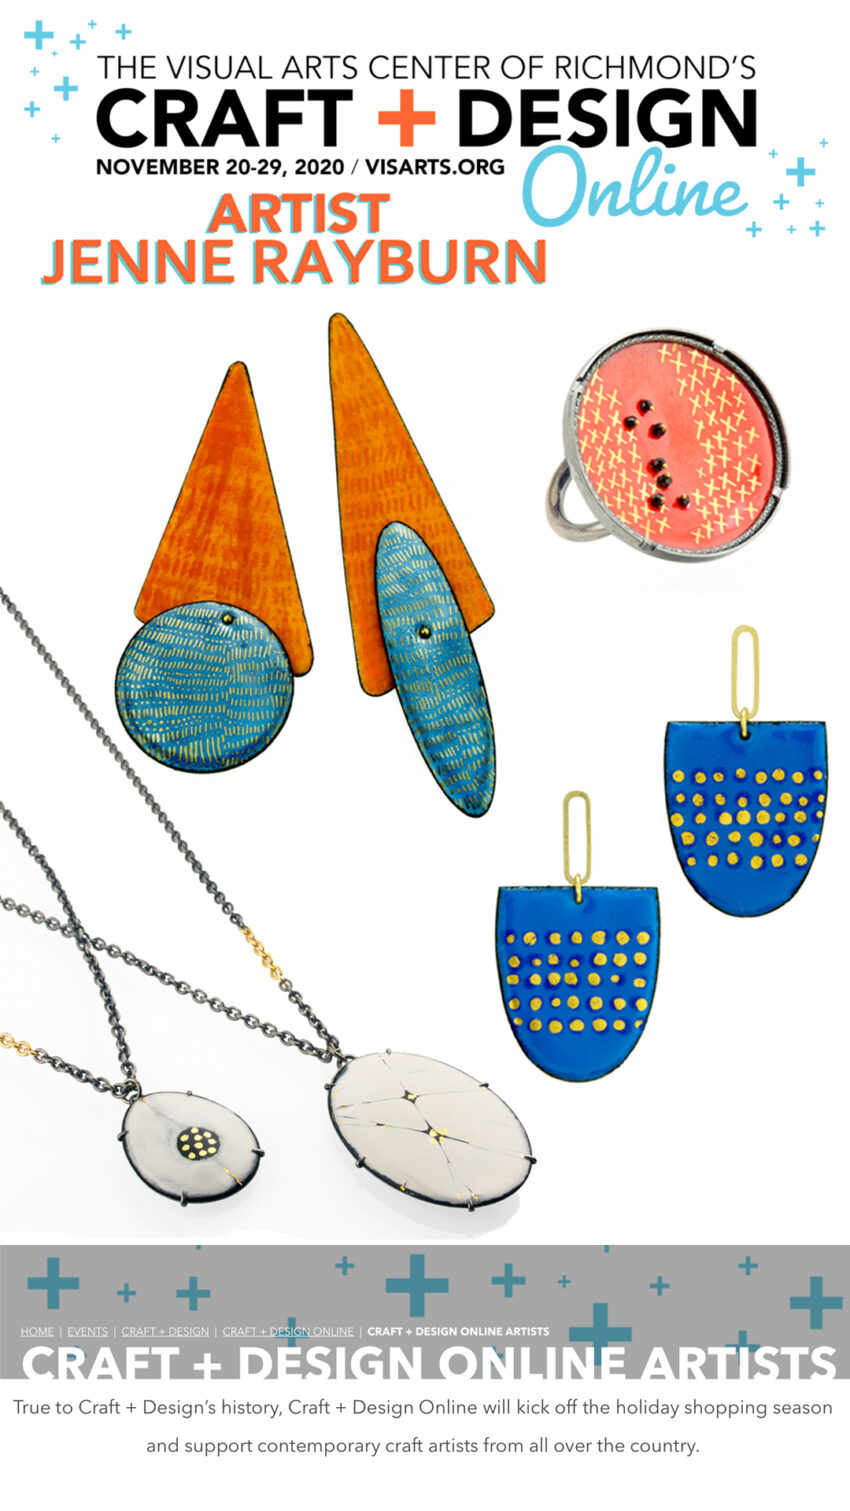 craft-design-art-jewelry-richmond-jenne rayburn